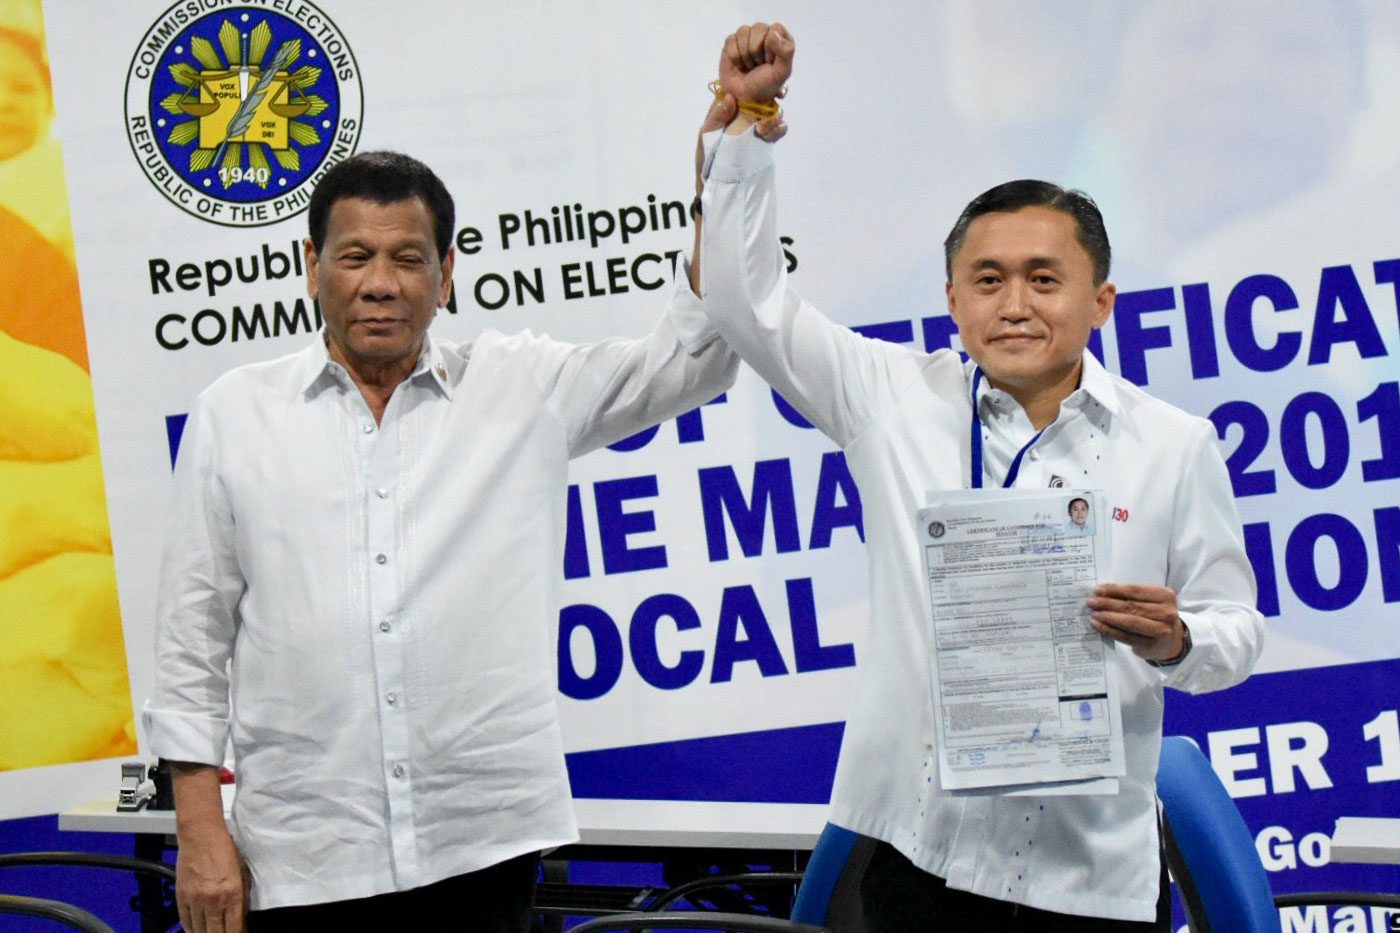 Accompanied by Duterte, Bong Go files candidacy for senator